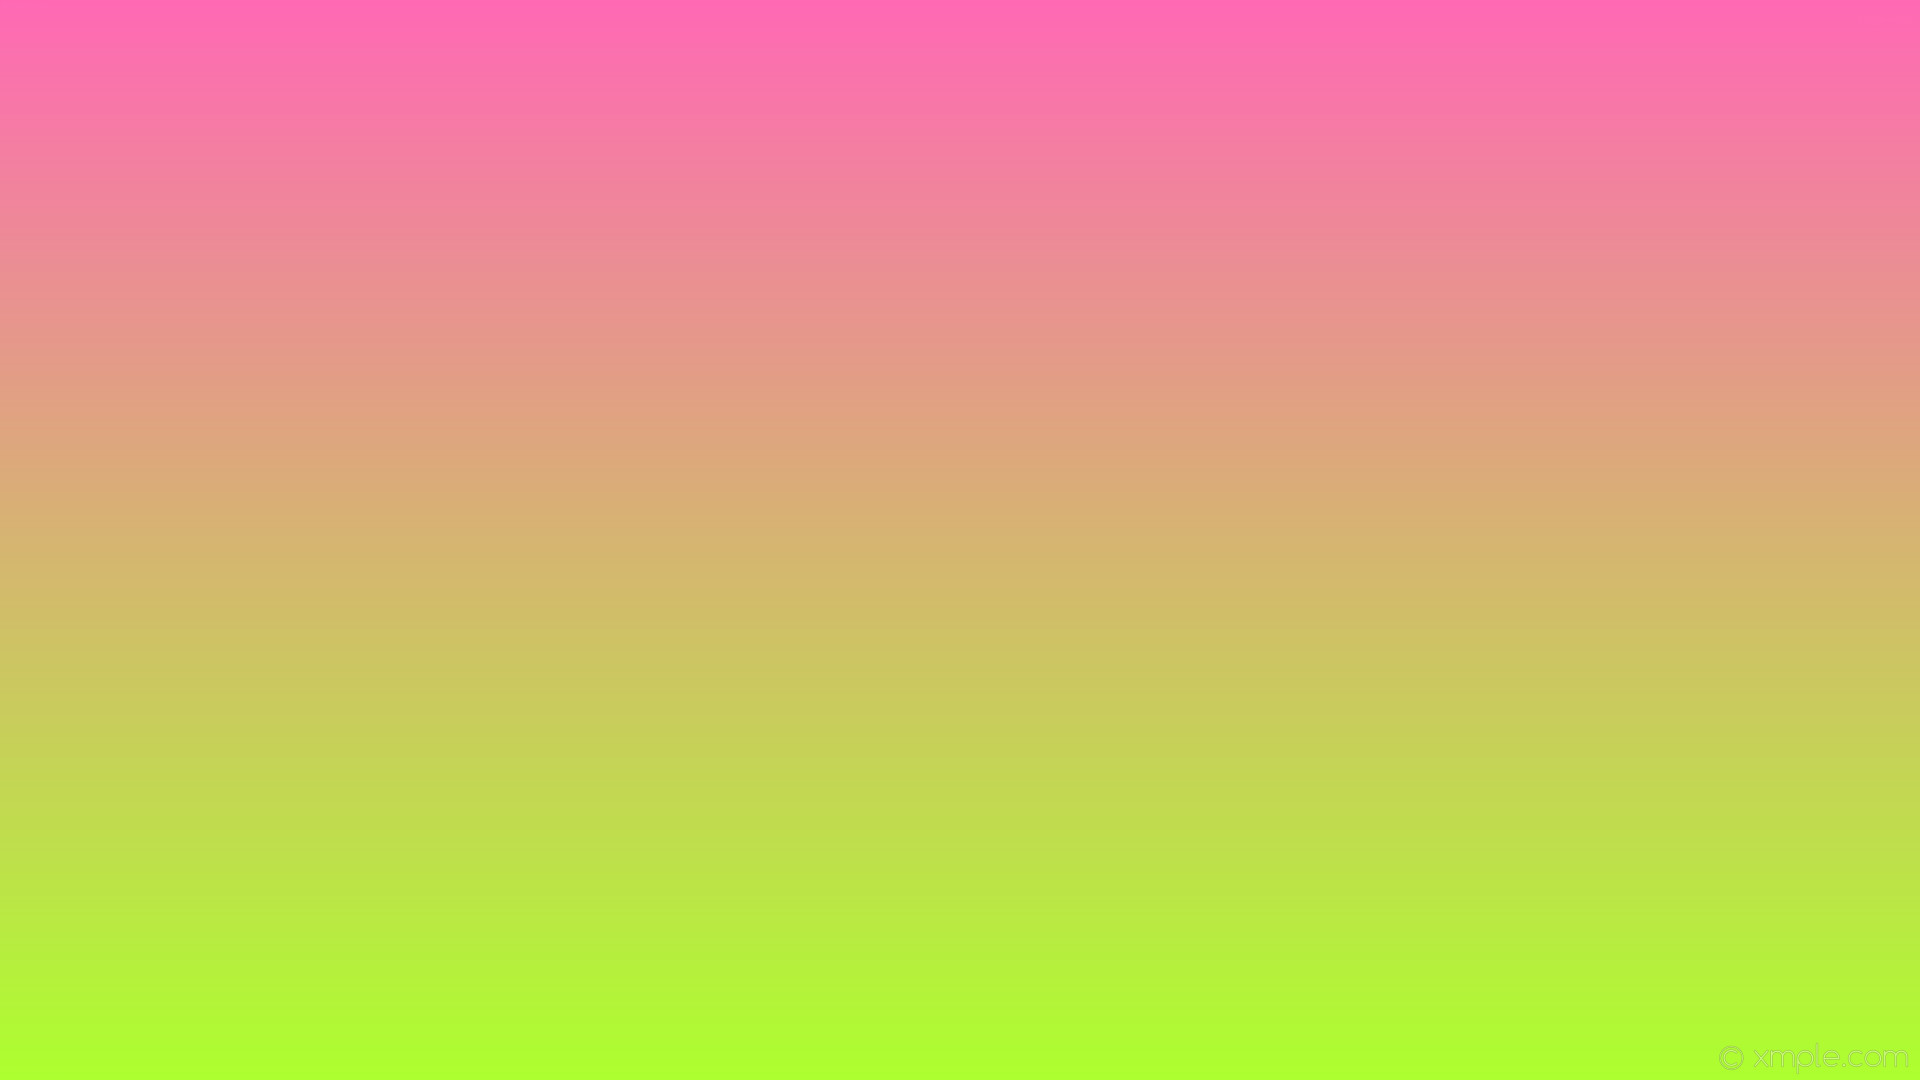 1920x1080 wallpaper pink gradient green linear hot pink green yellow #ff69b4 #adff2f  90Â°